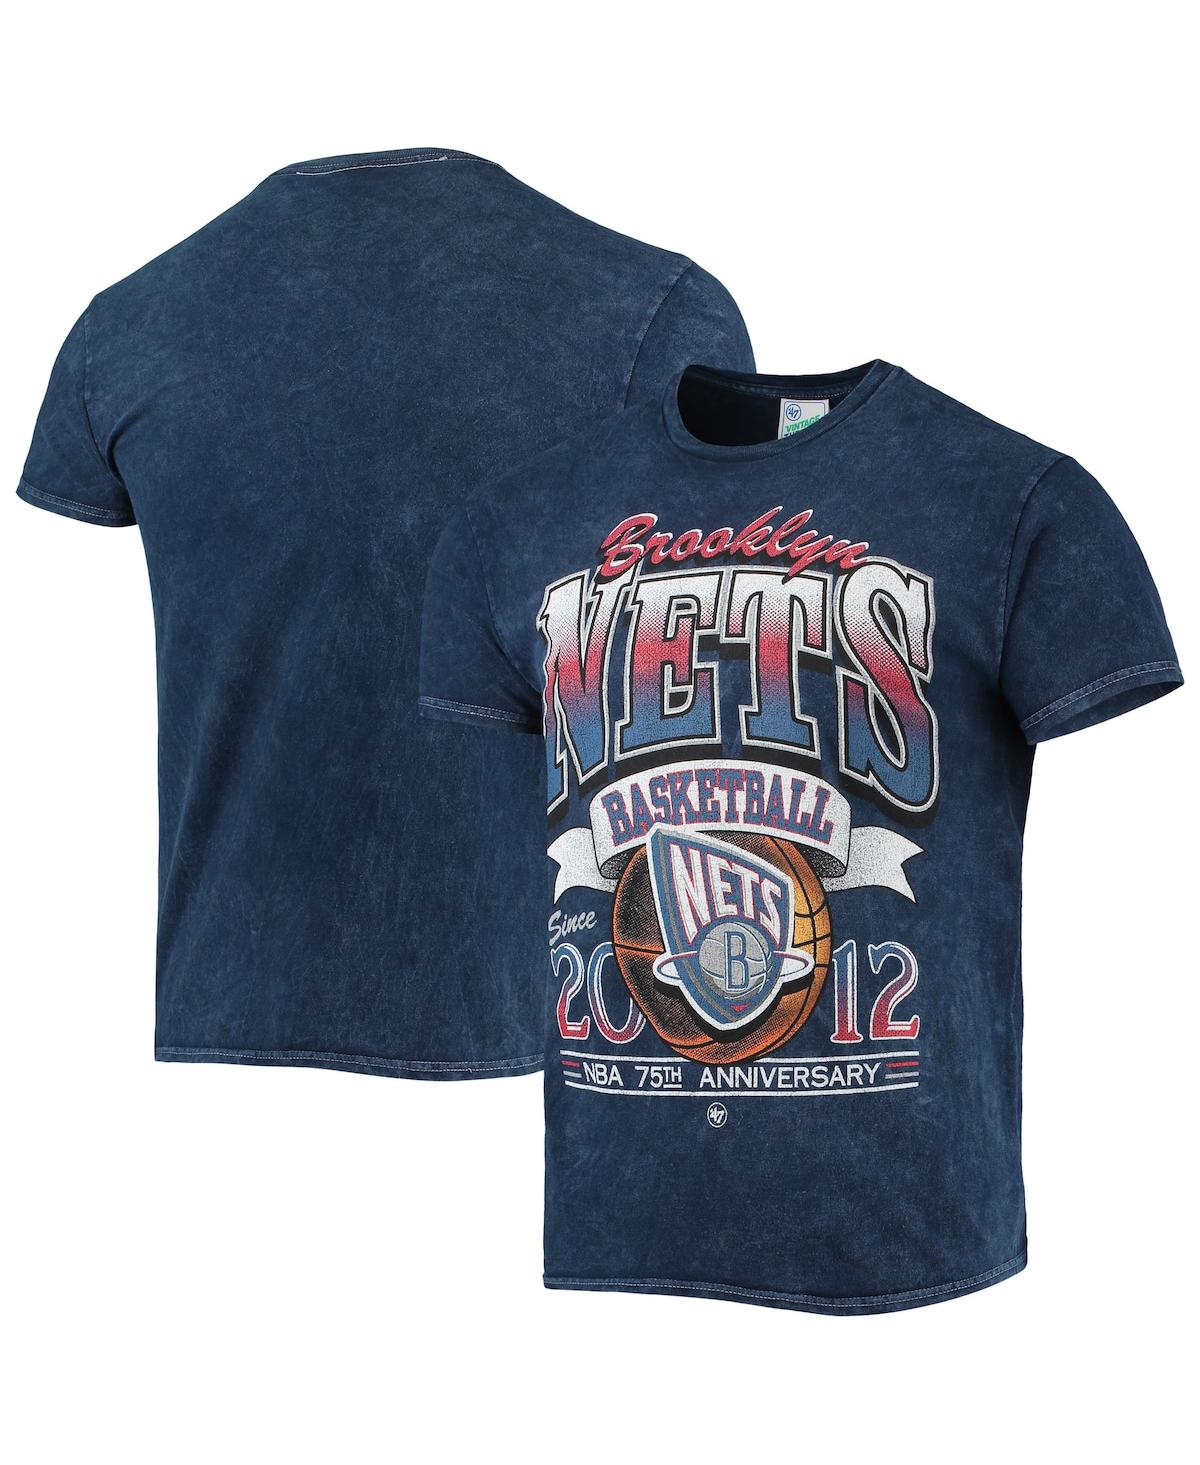 47 Brand Men's '47 Navy Brooklyn Nets 75th Anniversary City Edition Mineral Wash Vintage-look Tubular T-shirt